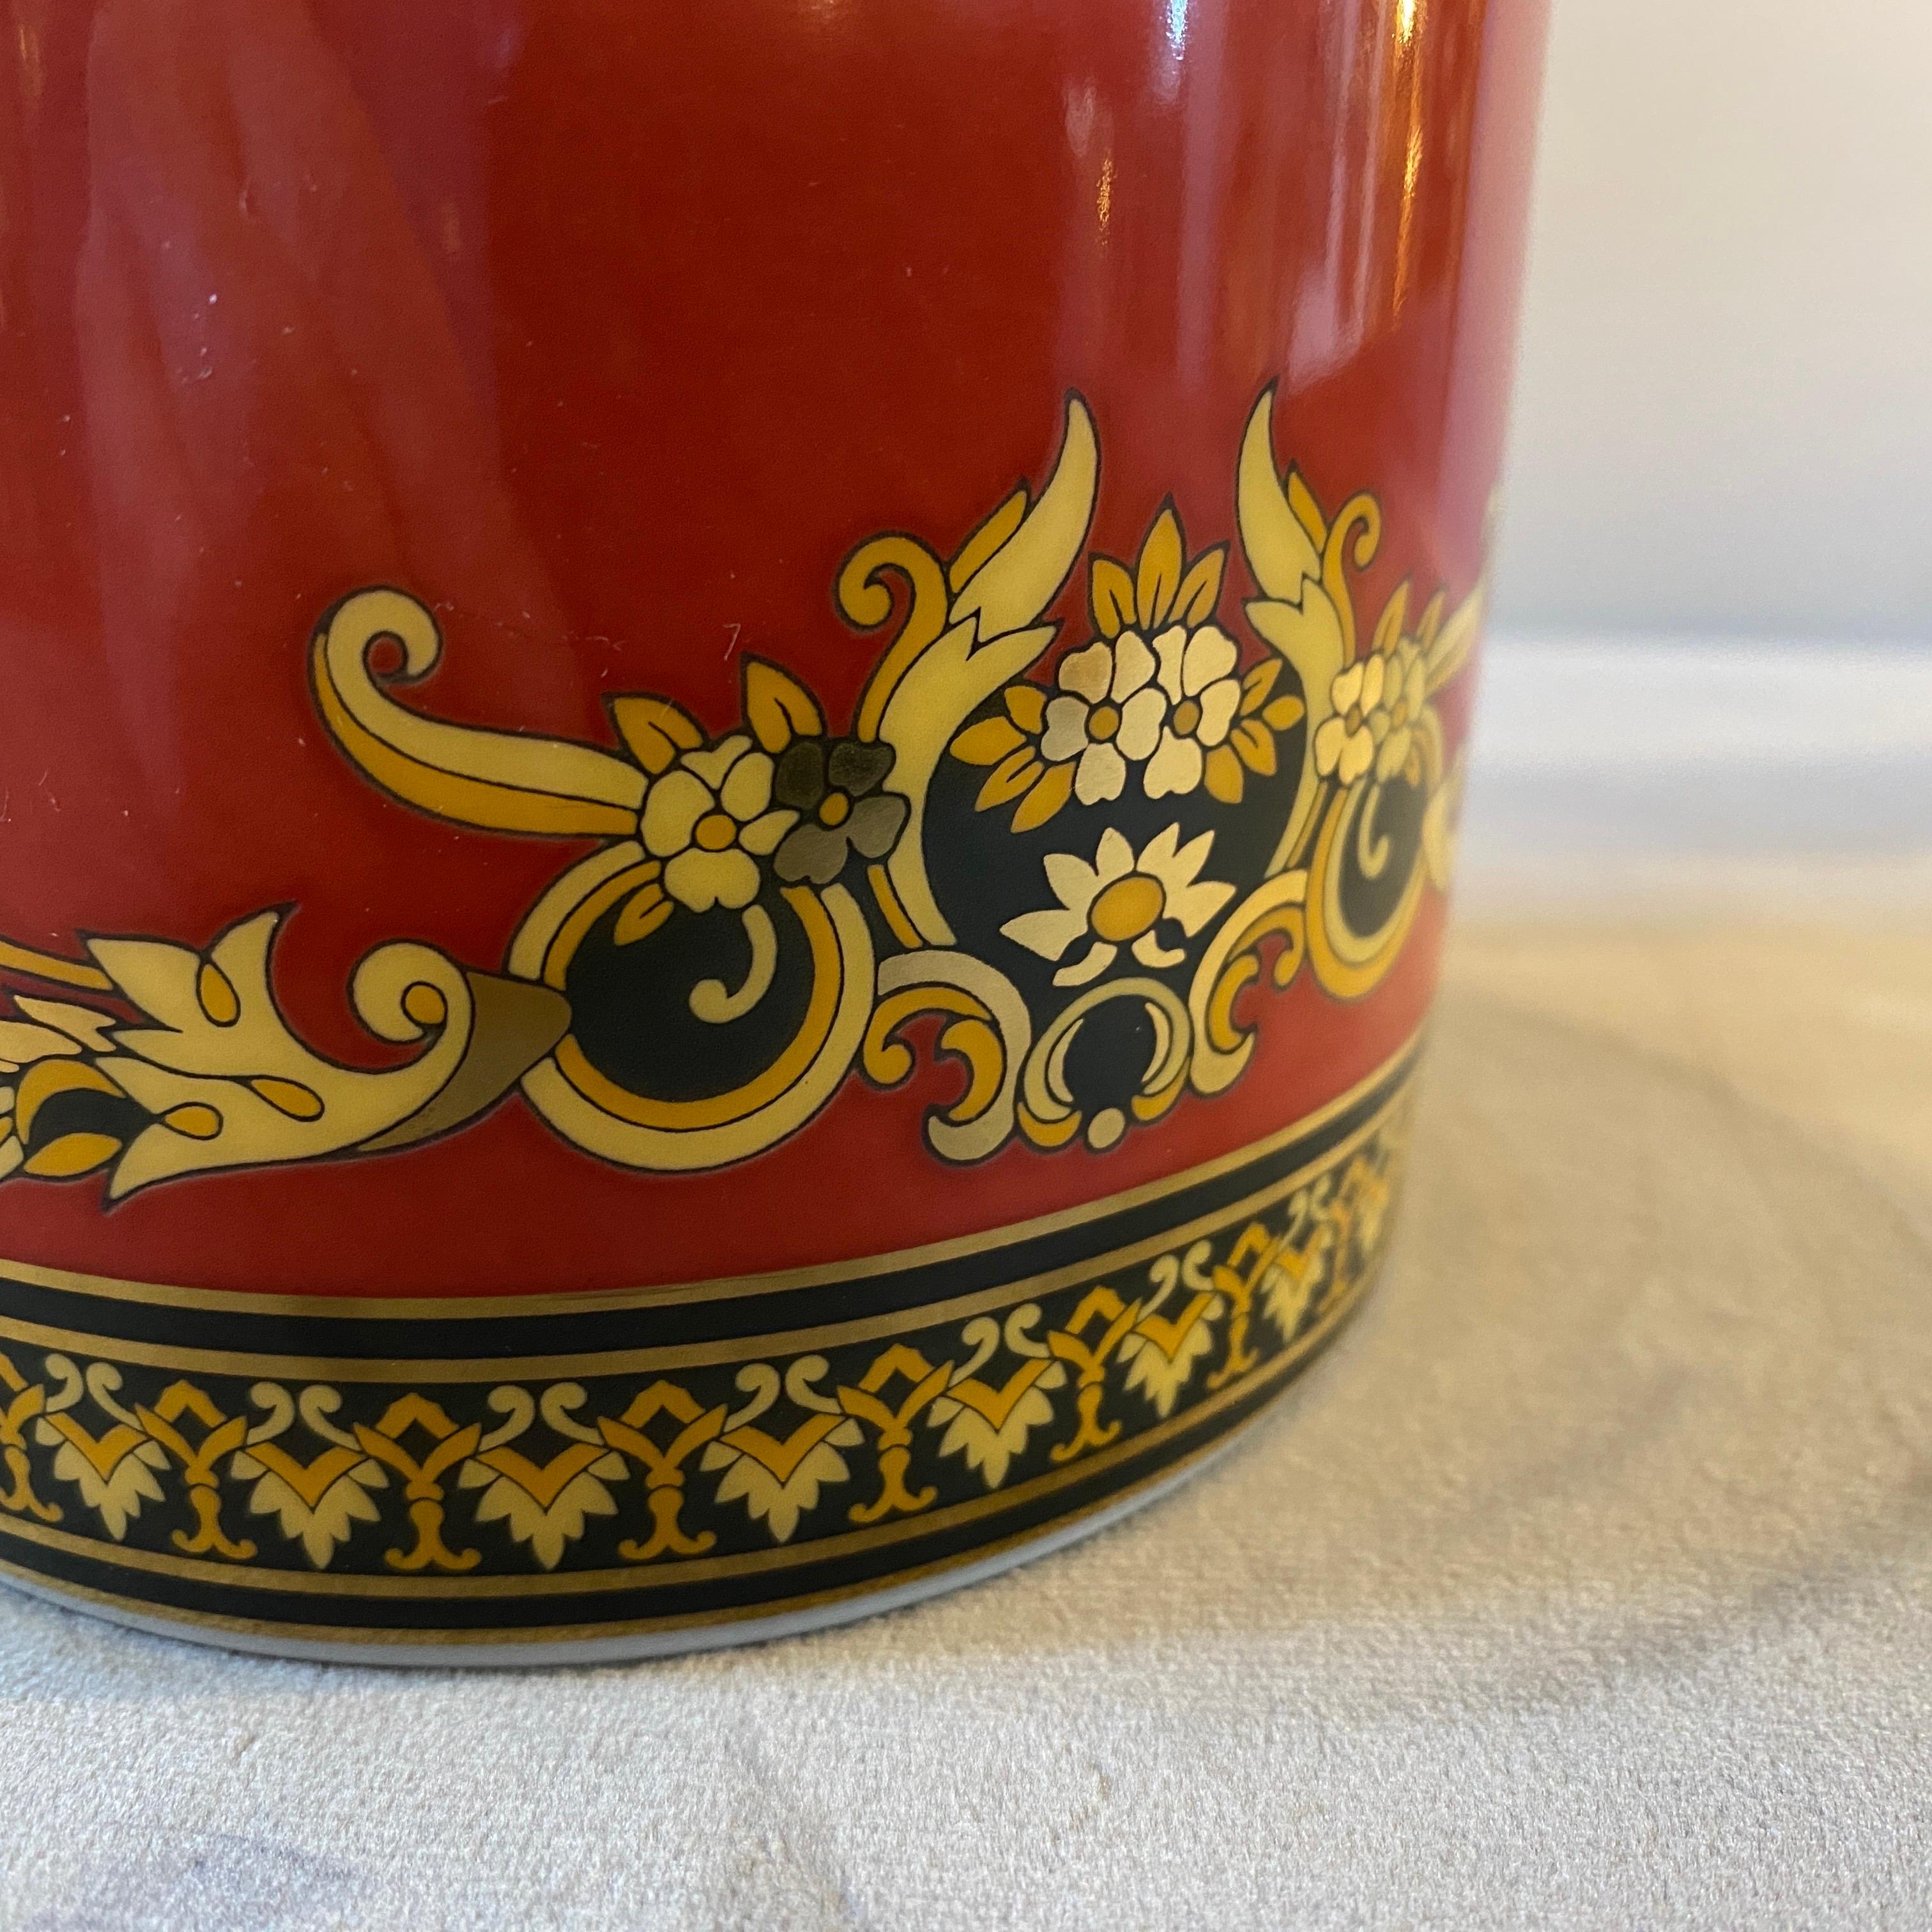 1990s, Iconic Porcelain Medusa Vase Designed by Gianni Versace for Rosenthal For Sale 1